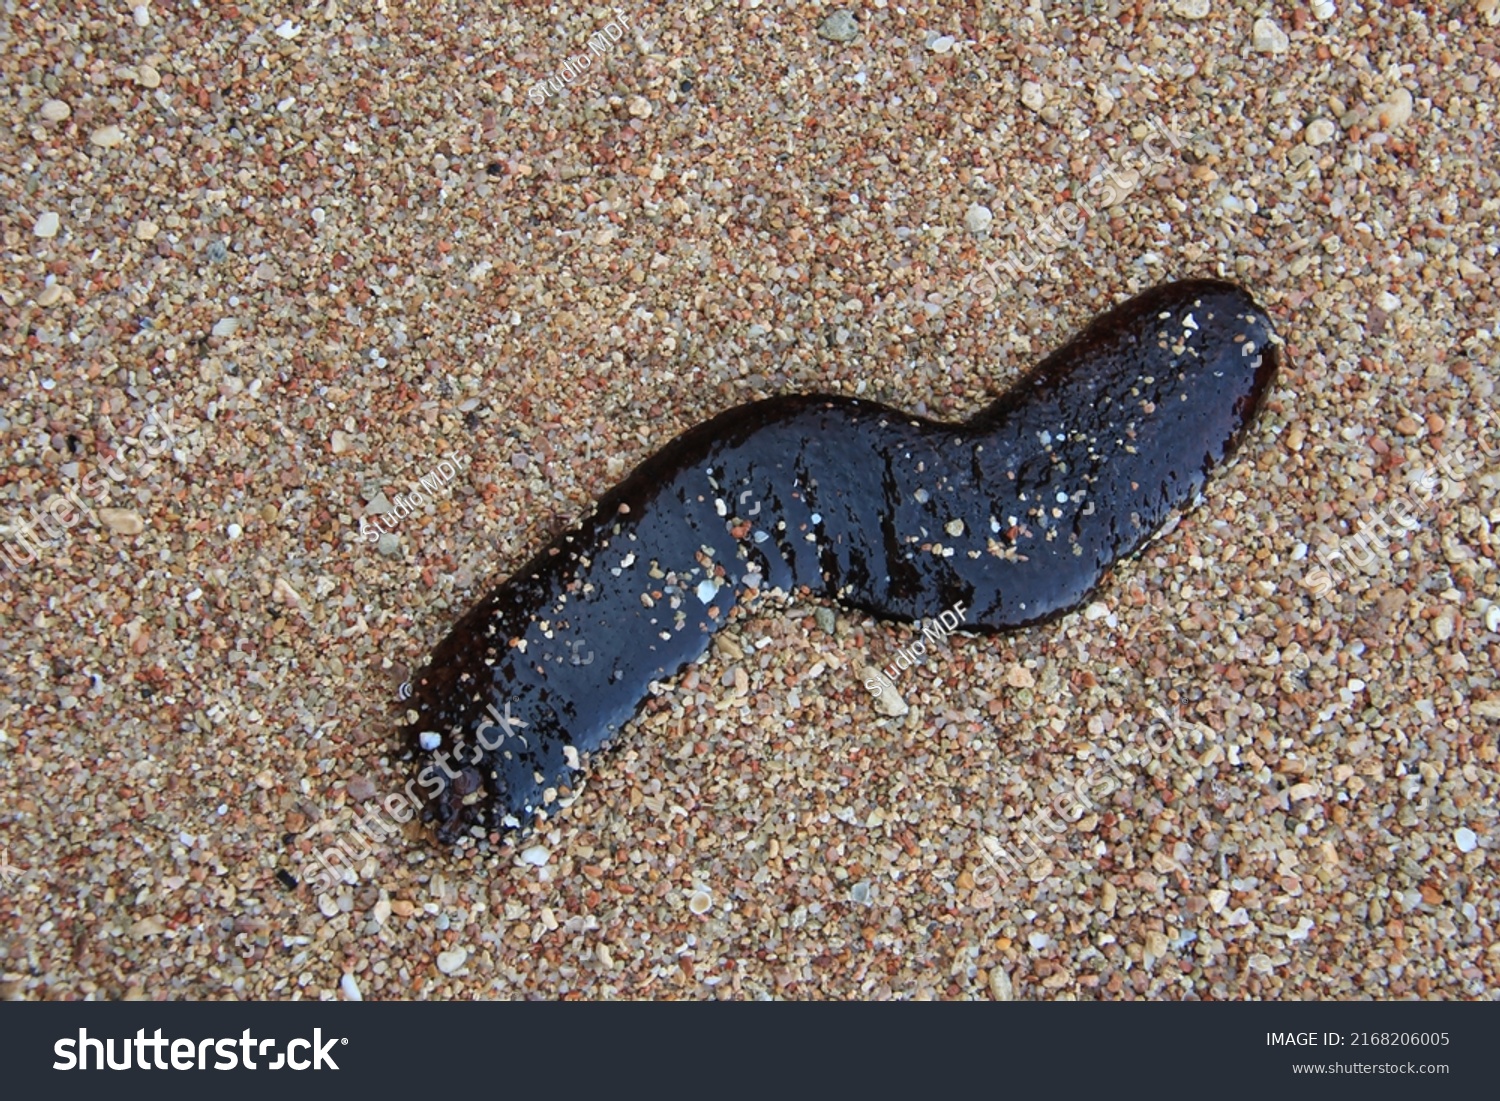 sea cucumber atop gravel, feeding. Sea cucumbers are echinoderms. class Holothuroidea. Marine animals #2168206005